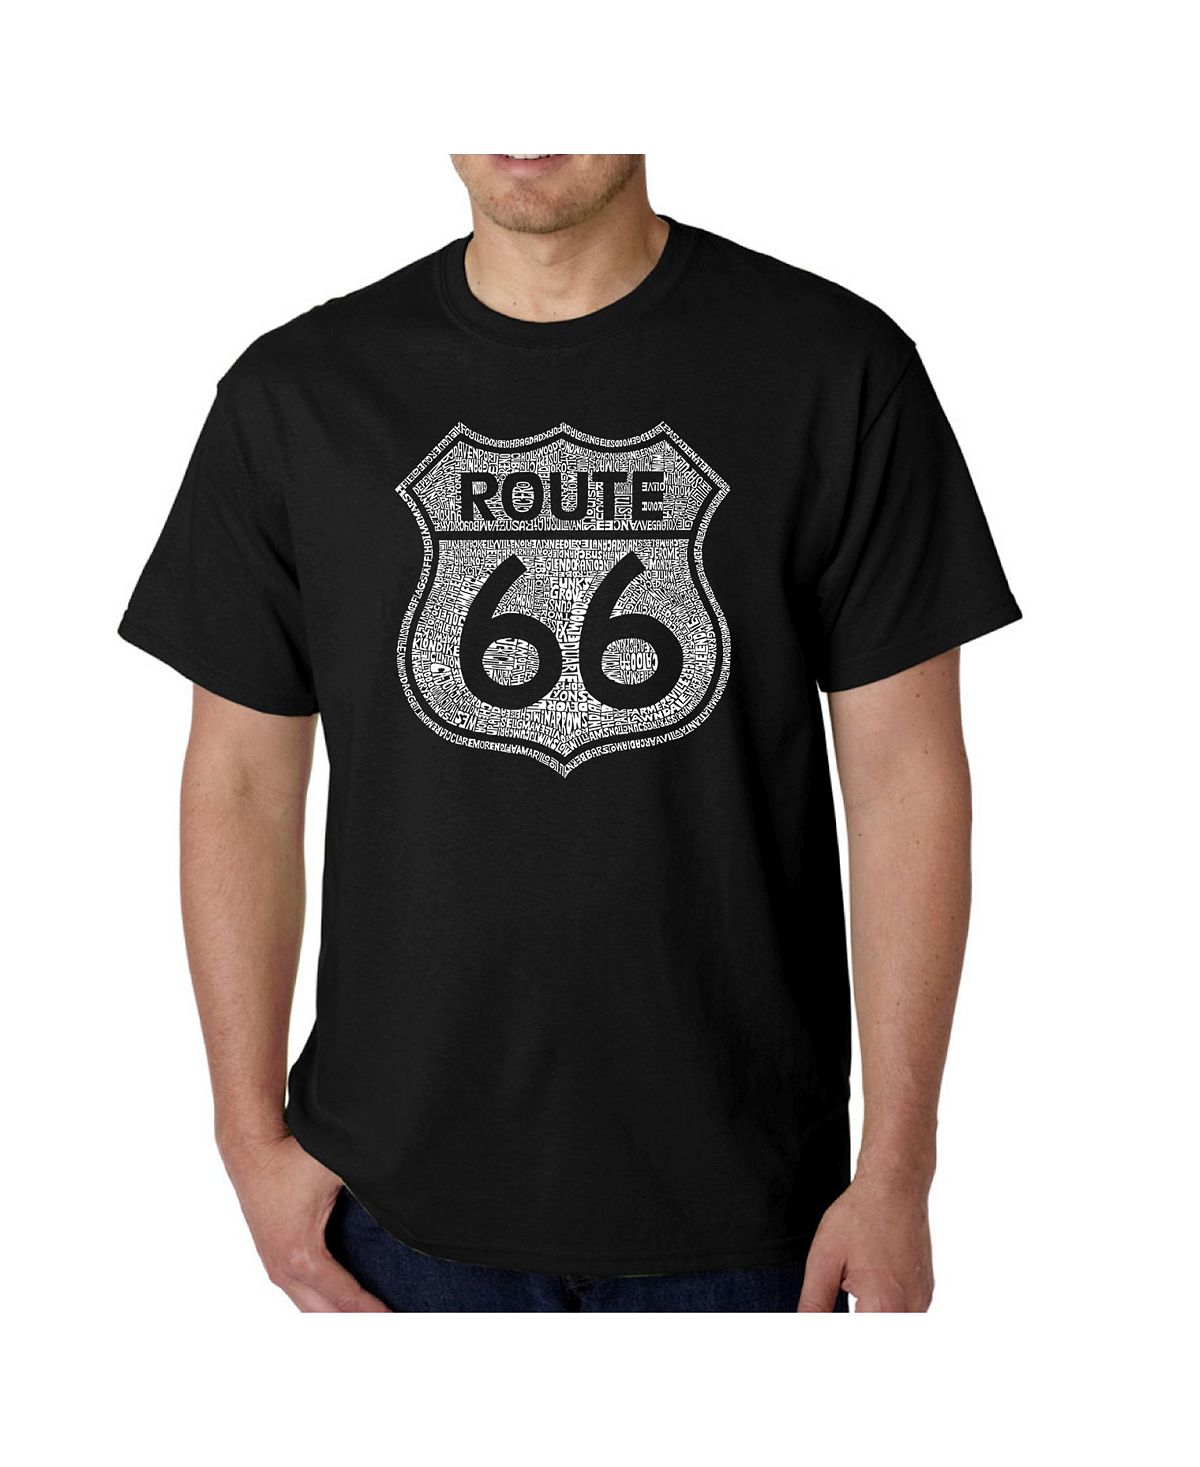 Мужская футболка с рисунком Word Art — Route 66 LA Pop Art